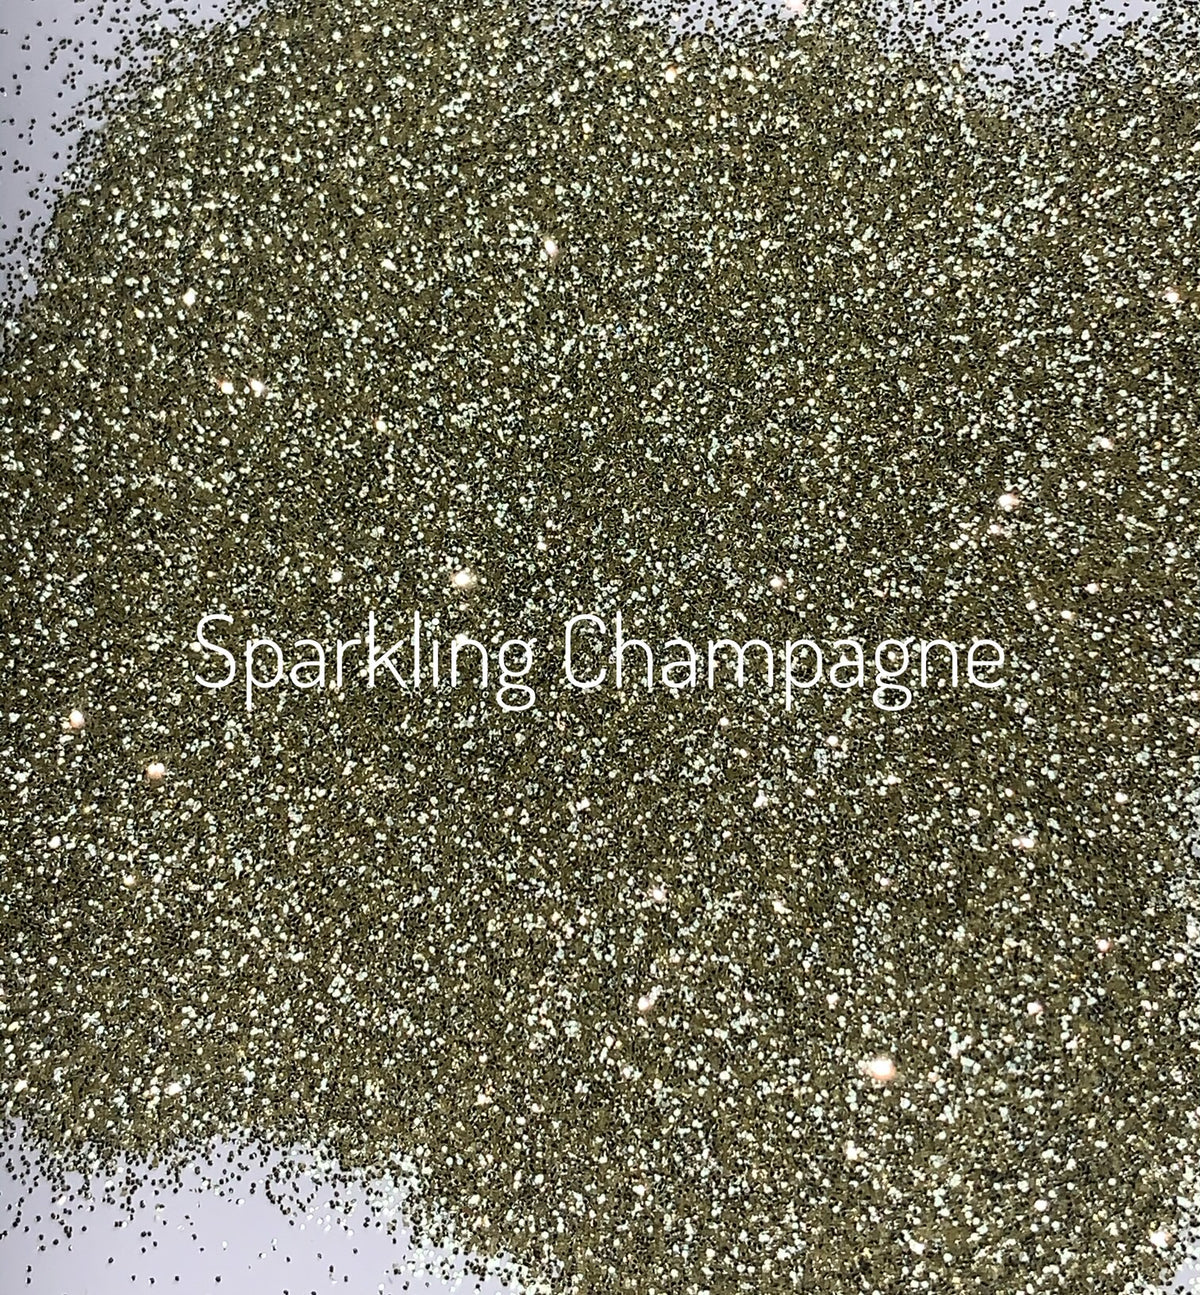 Sparkling Champagne - 1/128